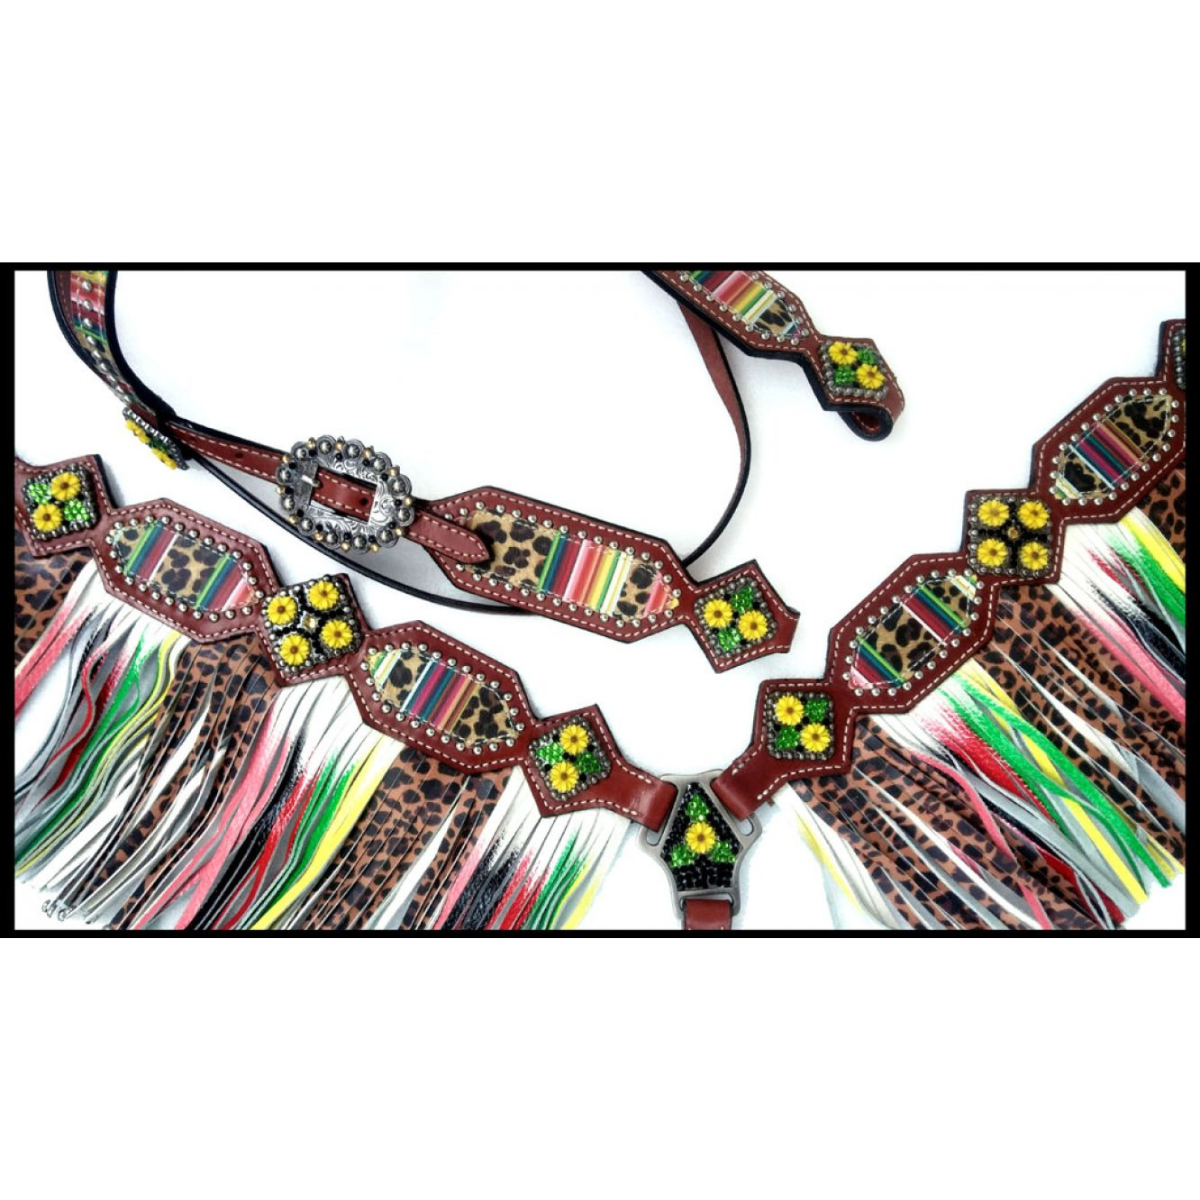 Showman ® Cheetah/ Serape print browband headstall and fringe breast collar set. - Double T Saddles